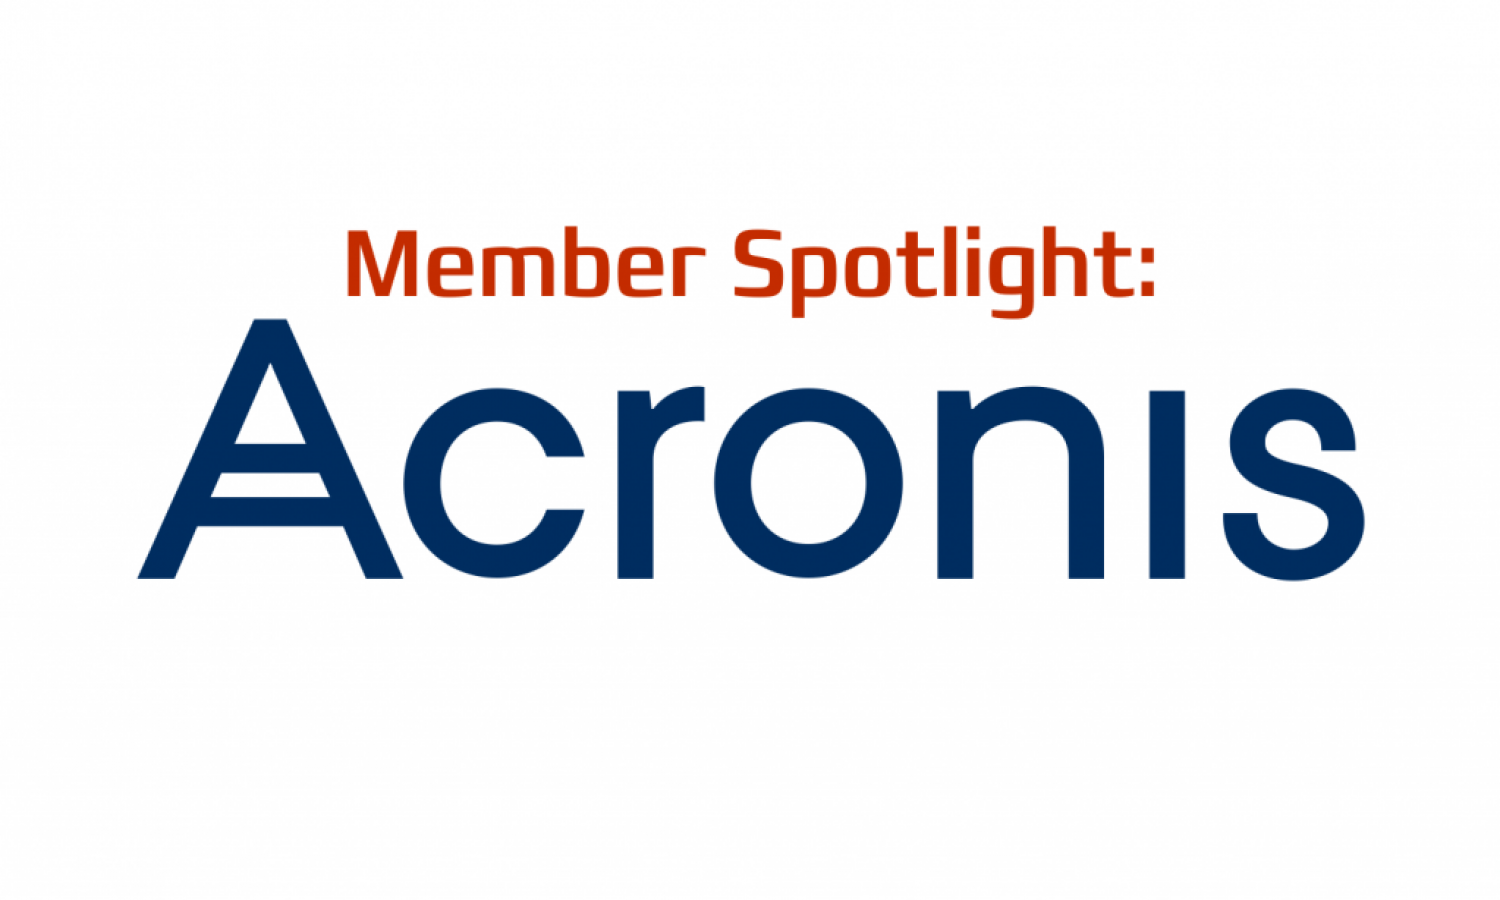 Acronis Member Spotlight